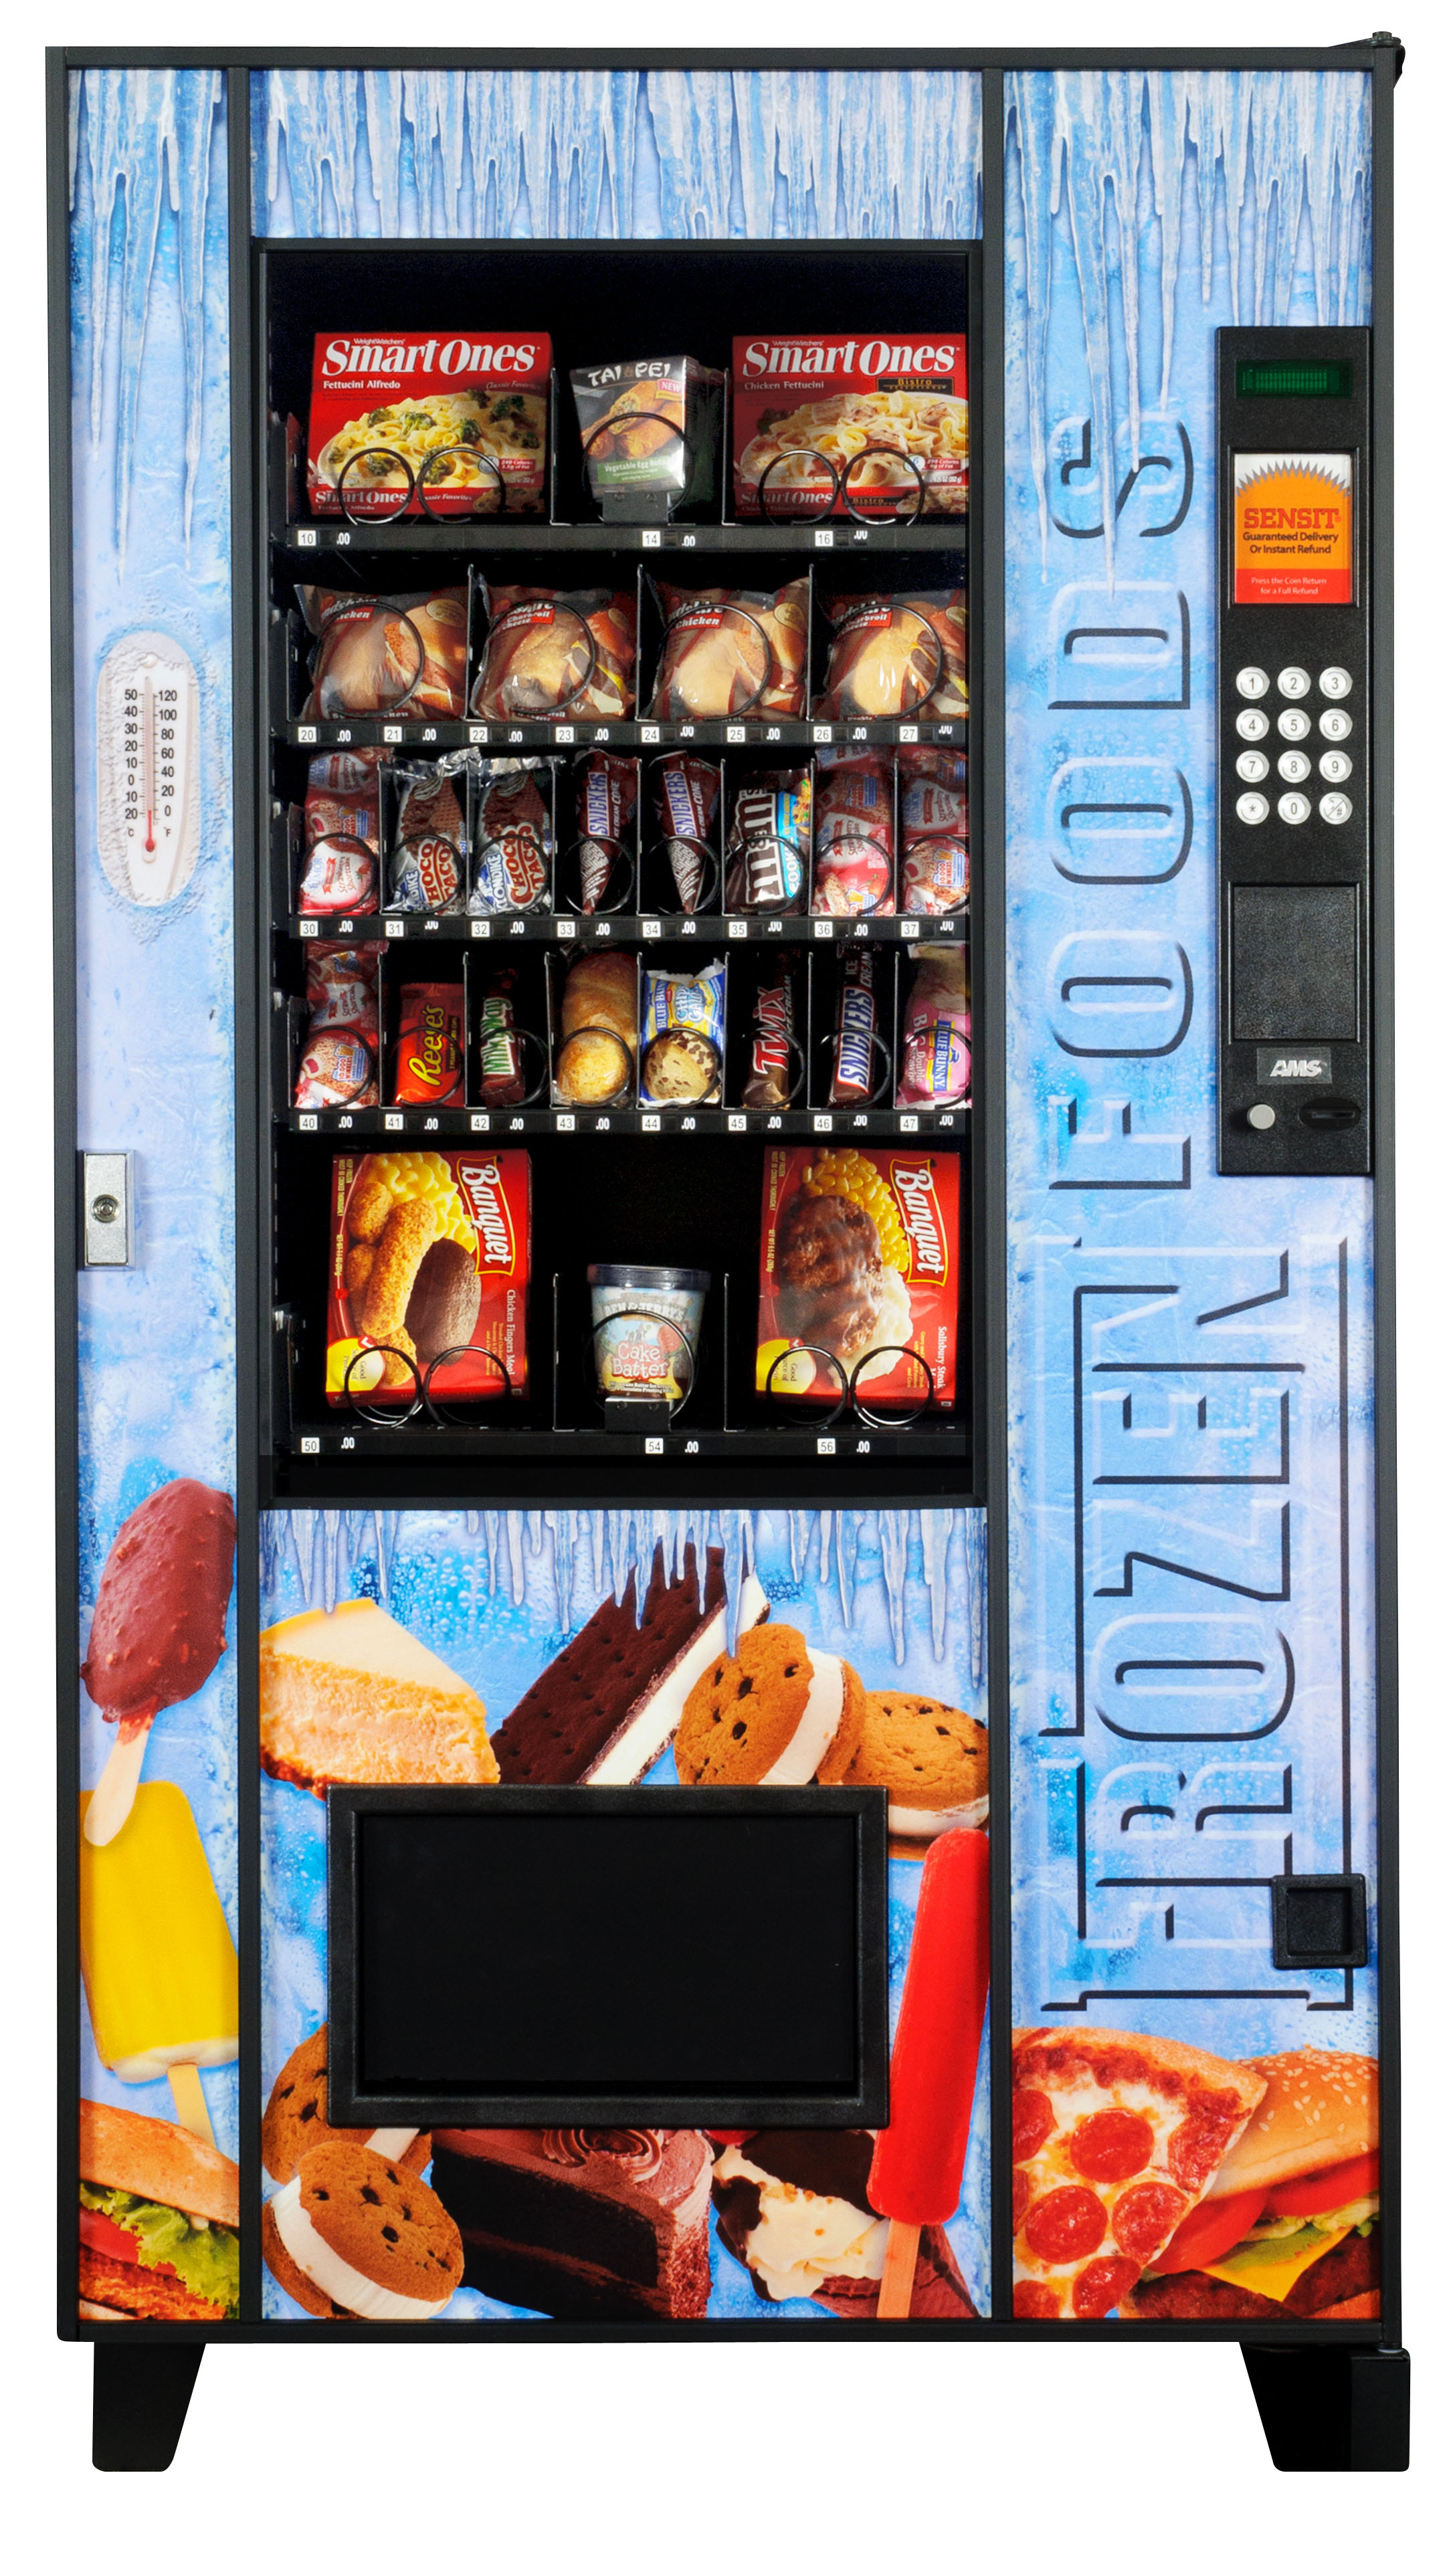 Does Your Chicago Break Room Have Frozen Food Vending Machines? | Mark Vend